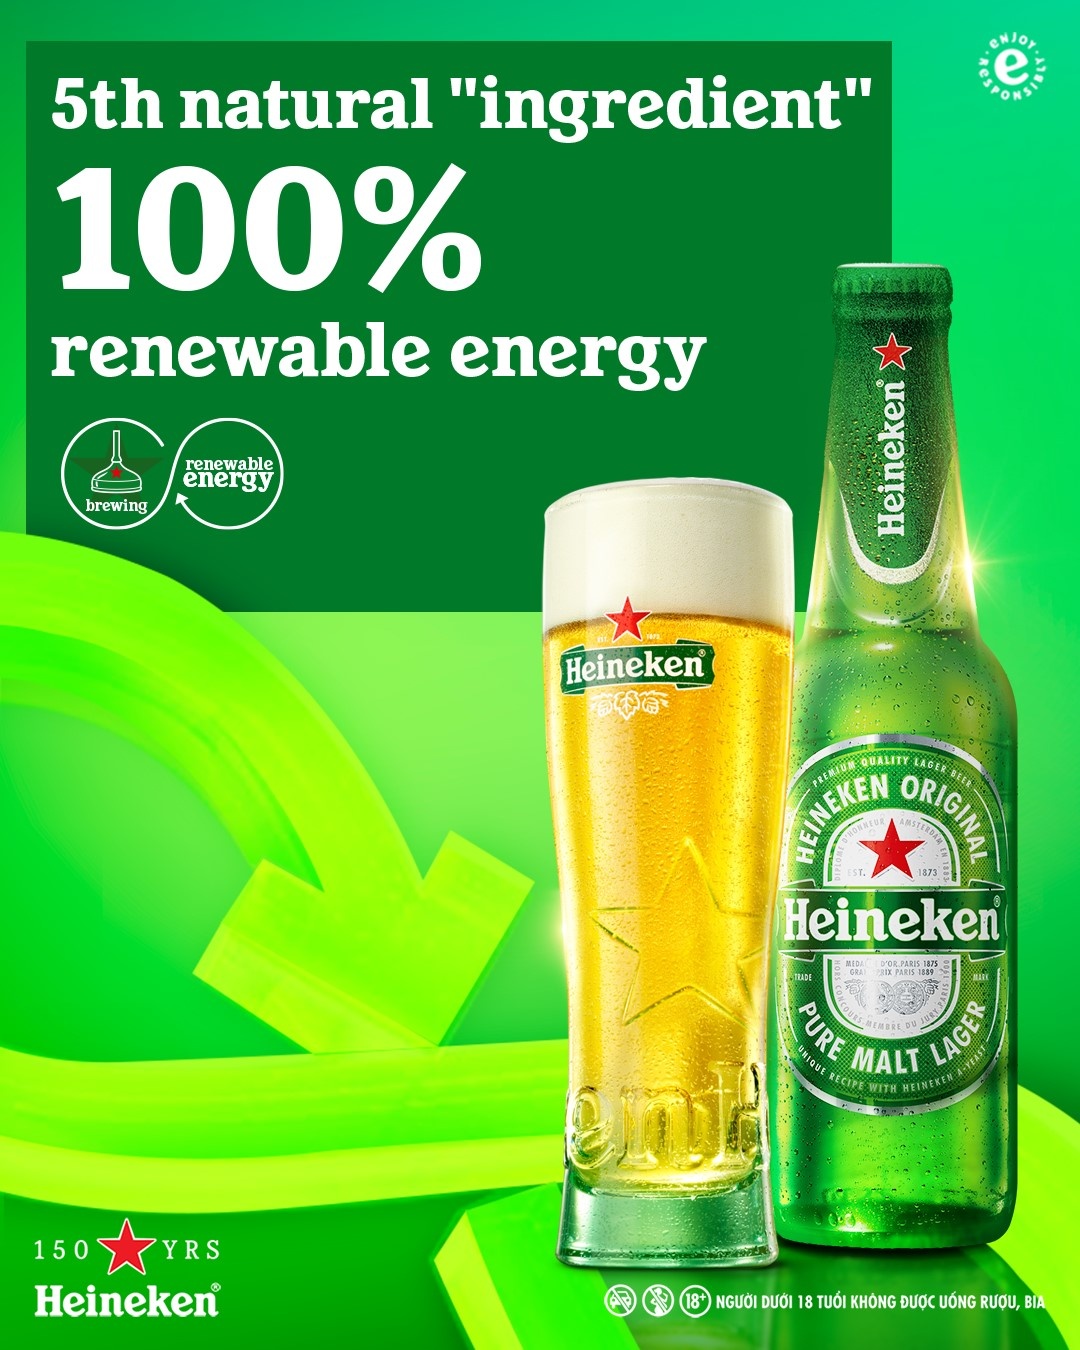 The Heineken brand creates good times from renewable energy